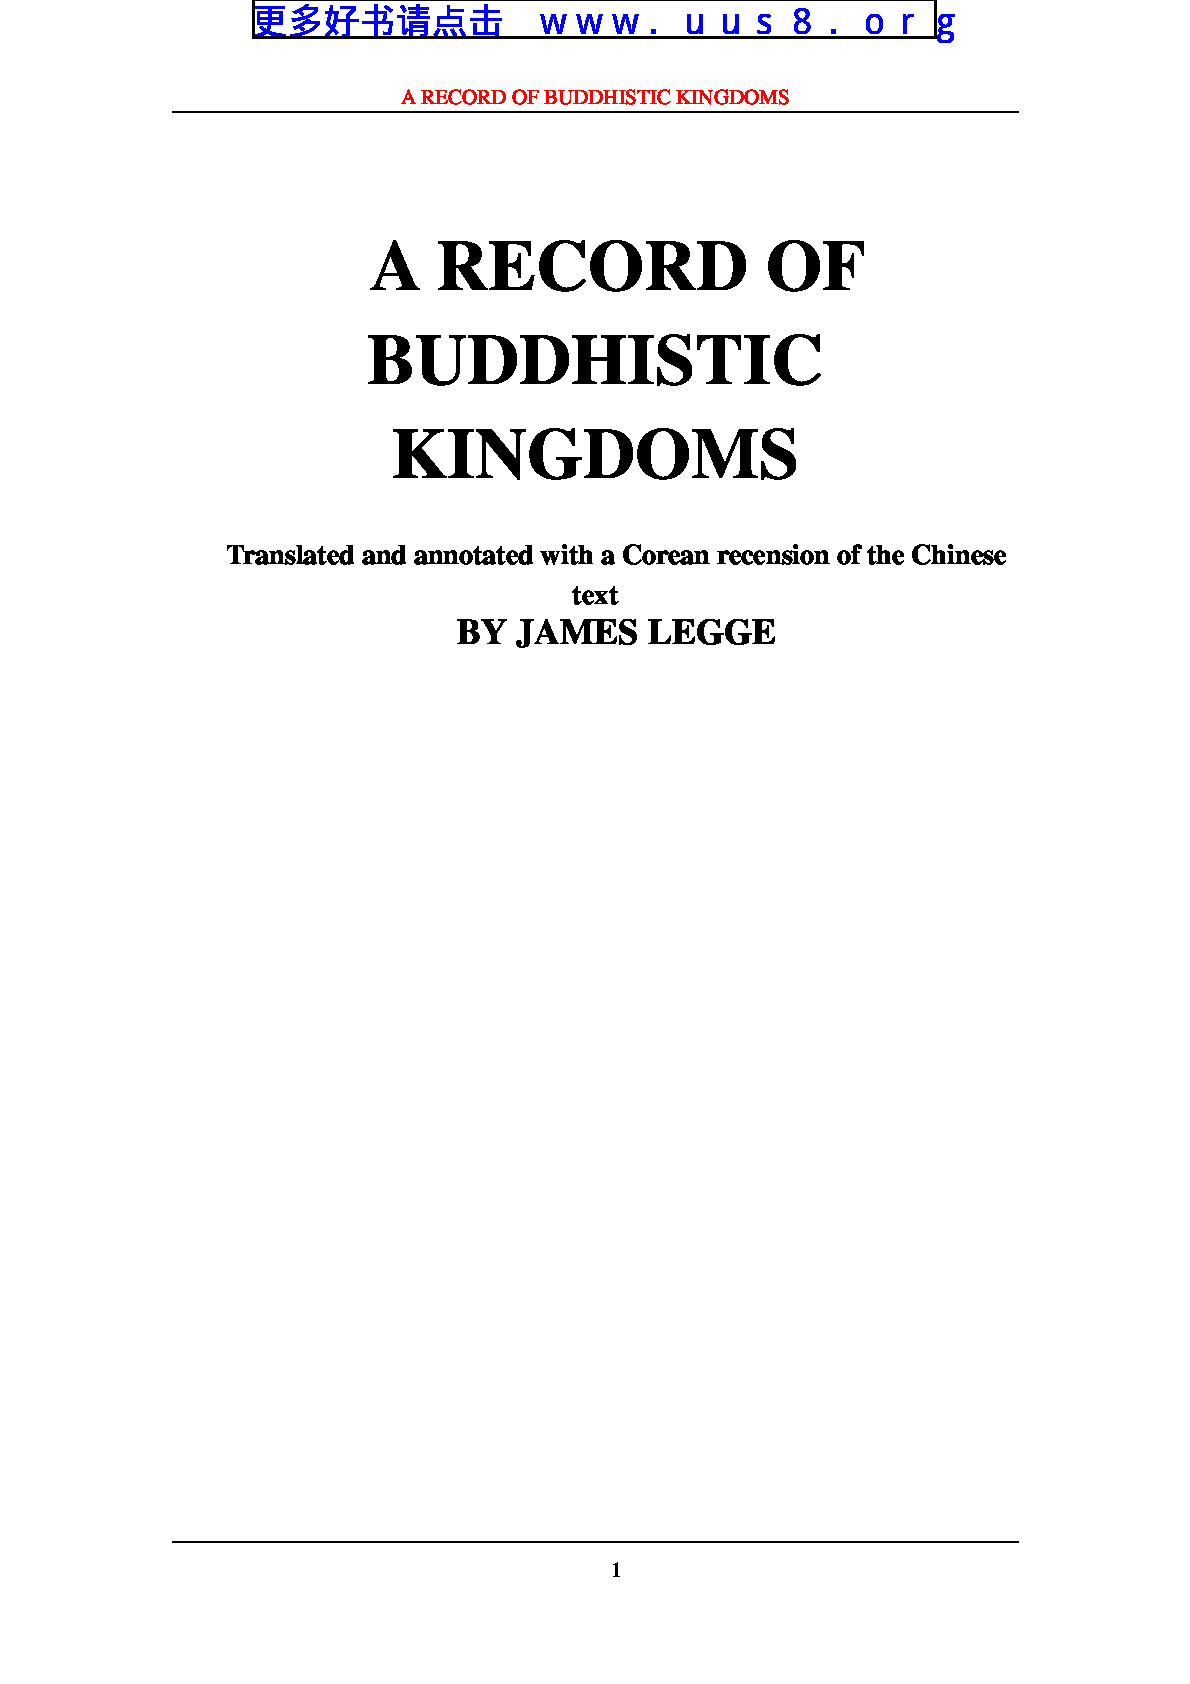 a_record_of_buddhistic_kingdoms(佛都记录)